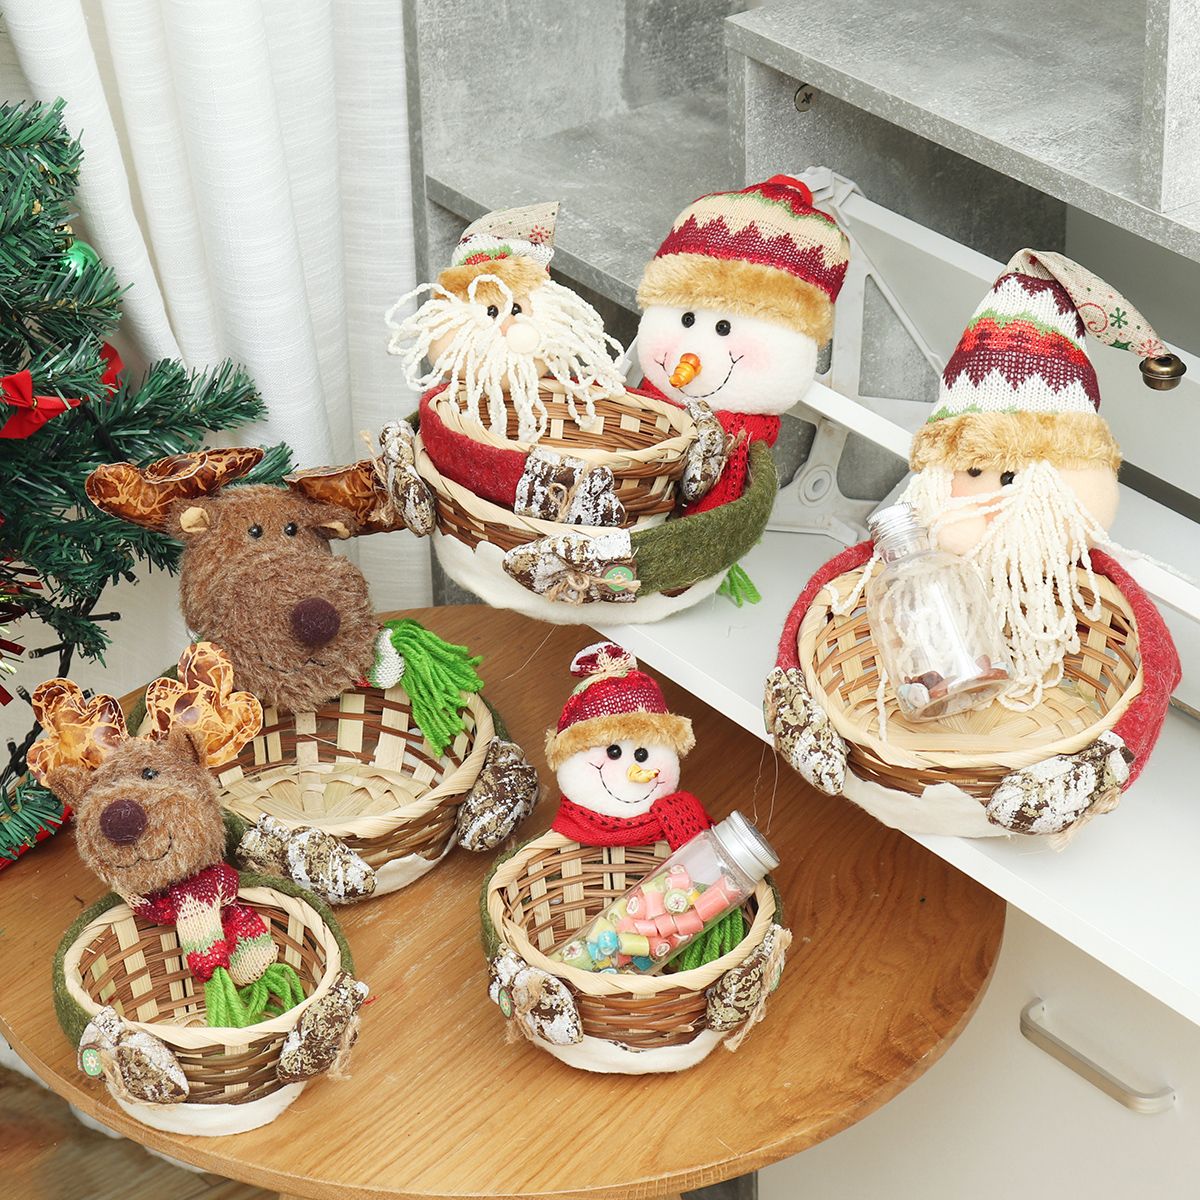 Christmas-Decoration-Candy-Basket-Desktop-Ornaments-Children-Candy-Basket-Decoration-Candy-Box-1753094